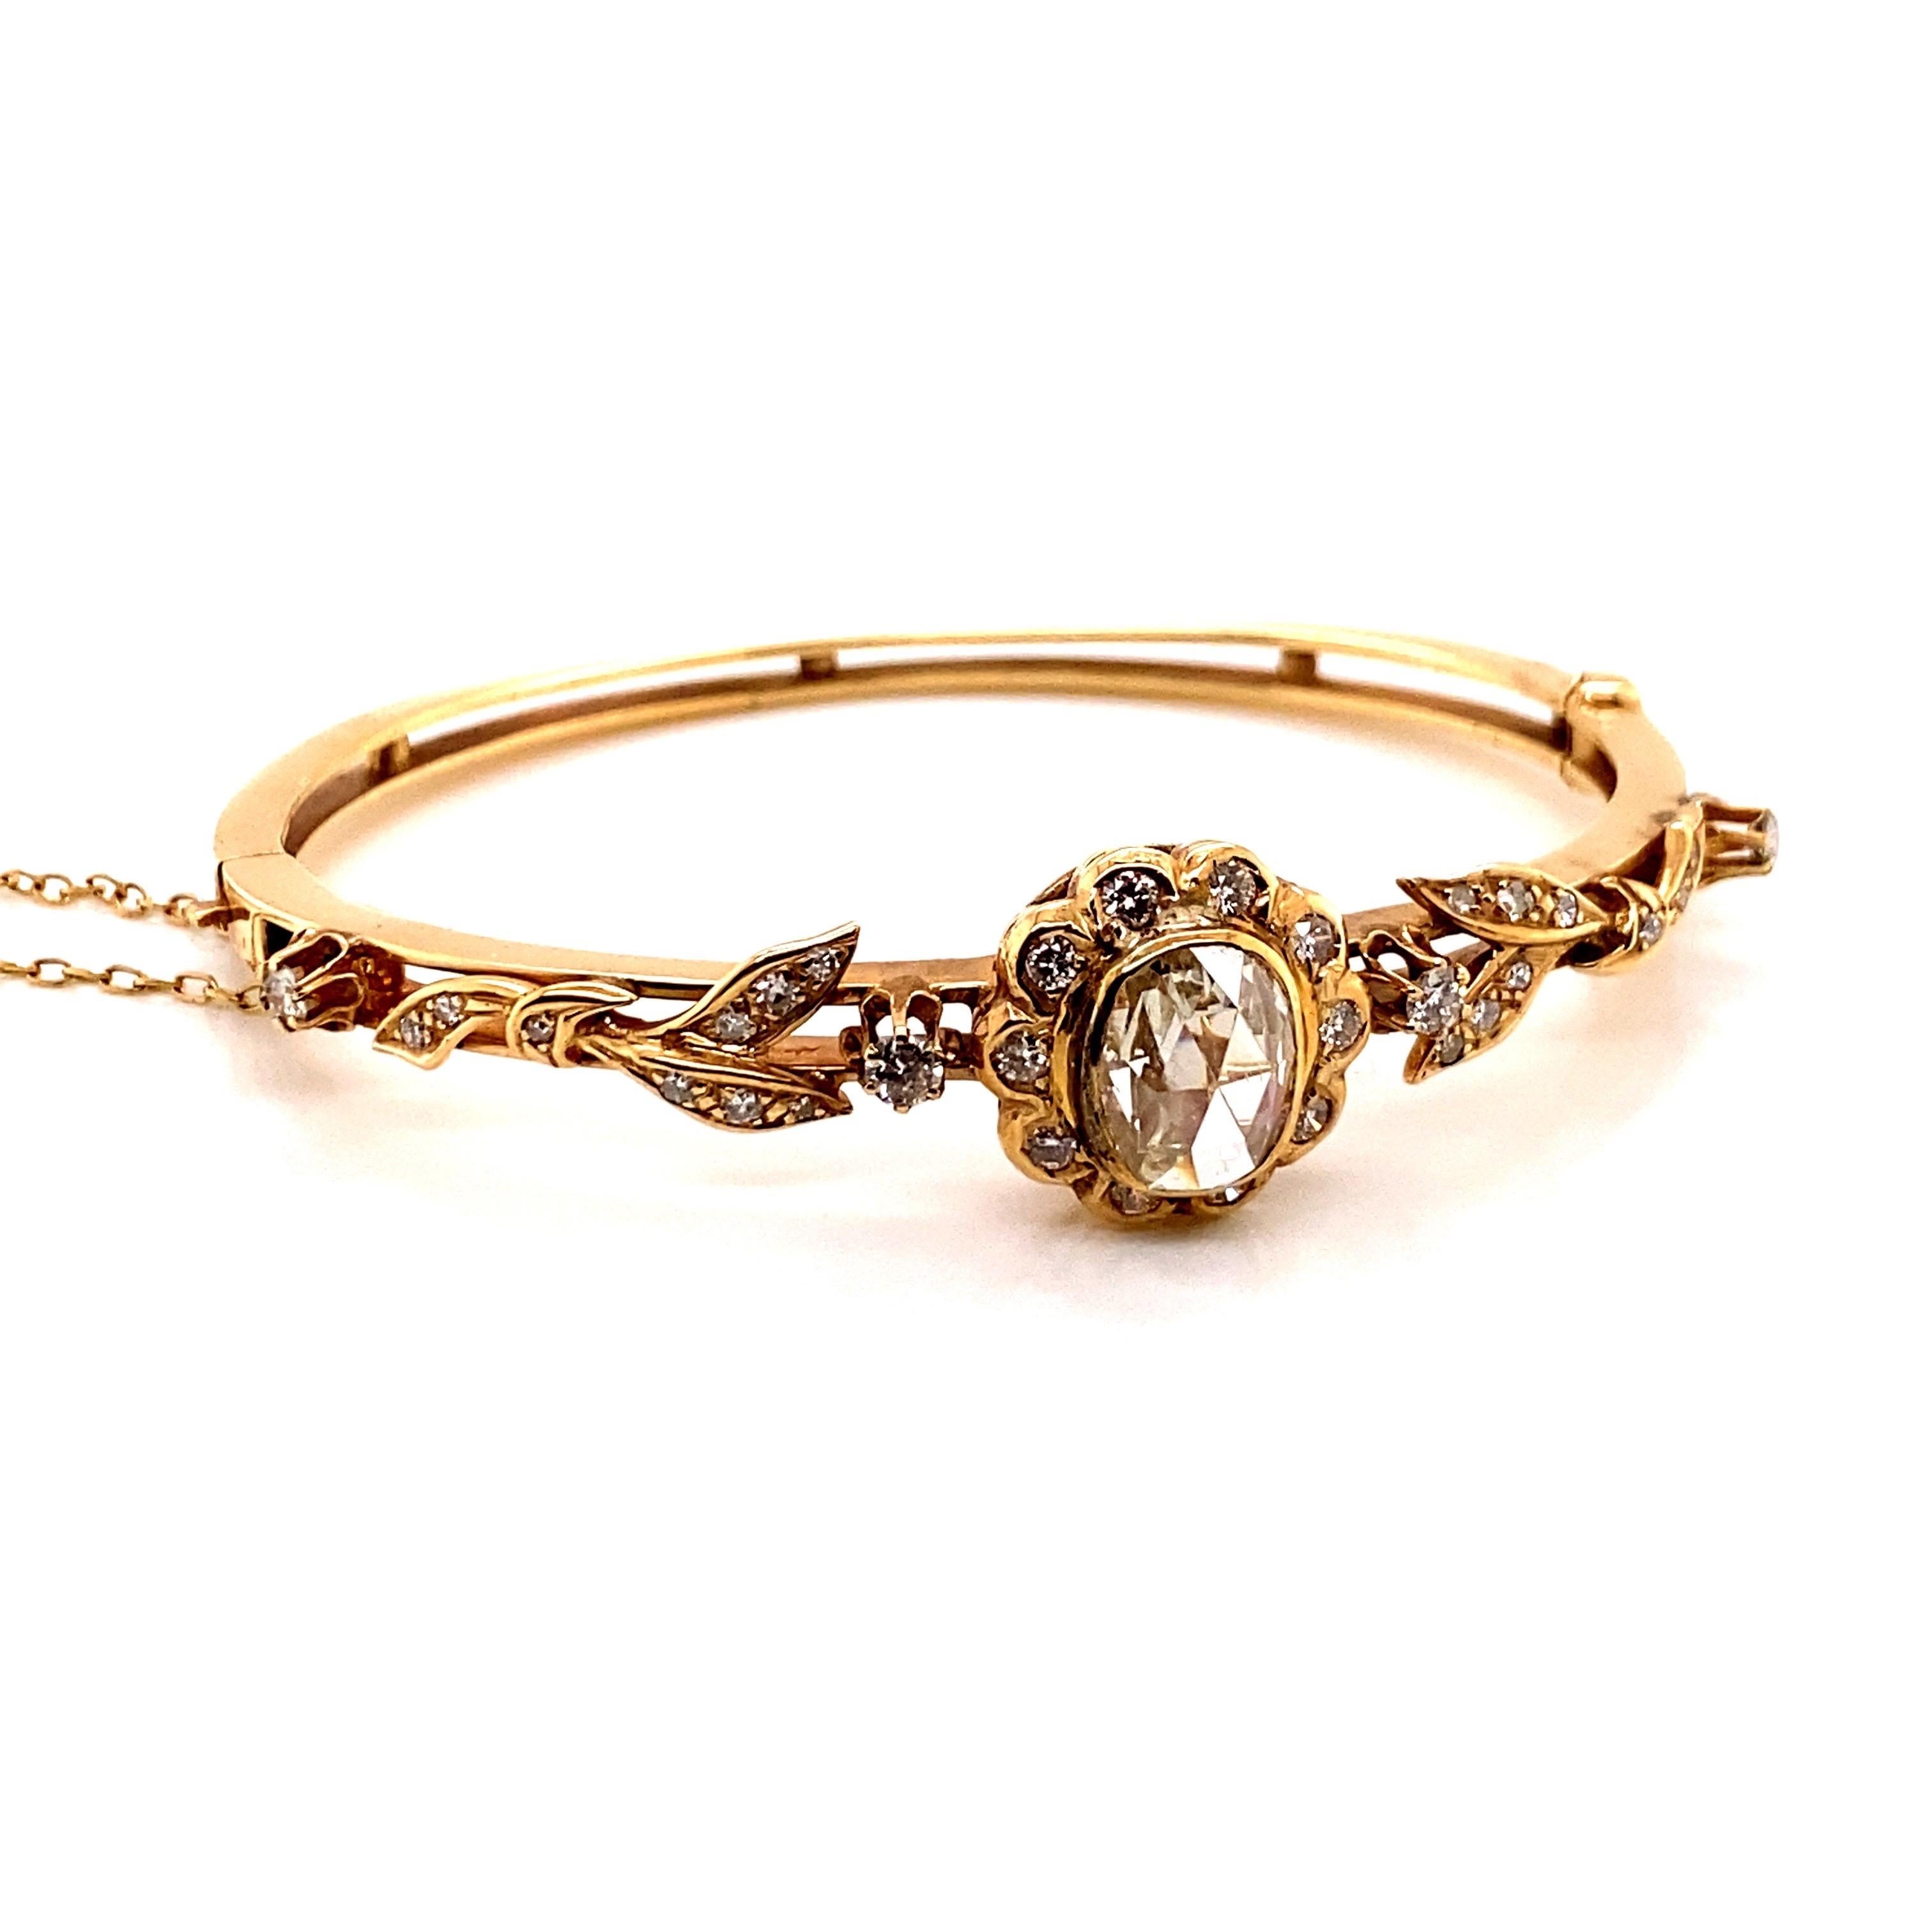 pearl gold bangles design